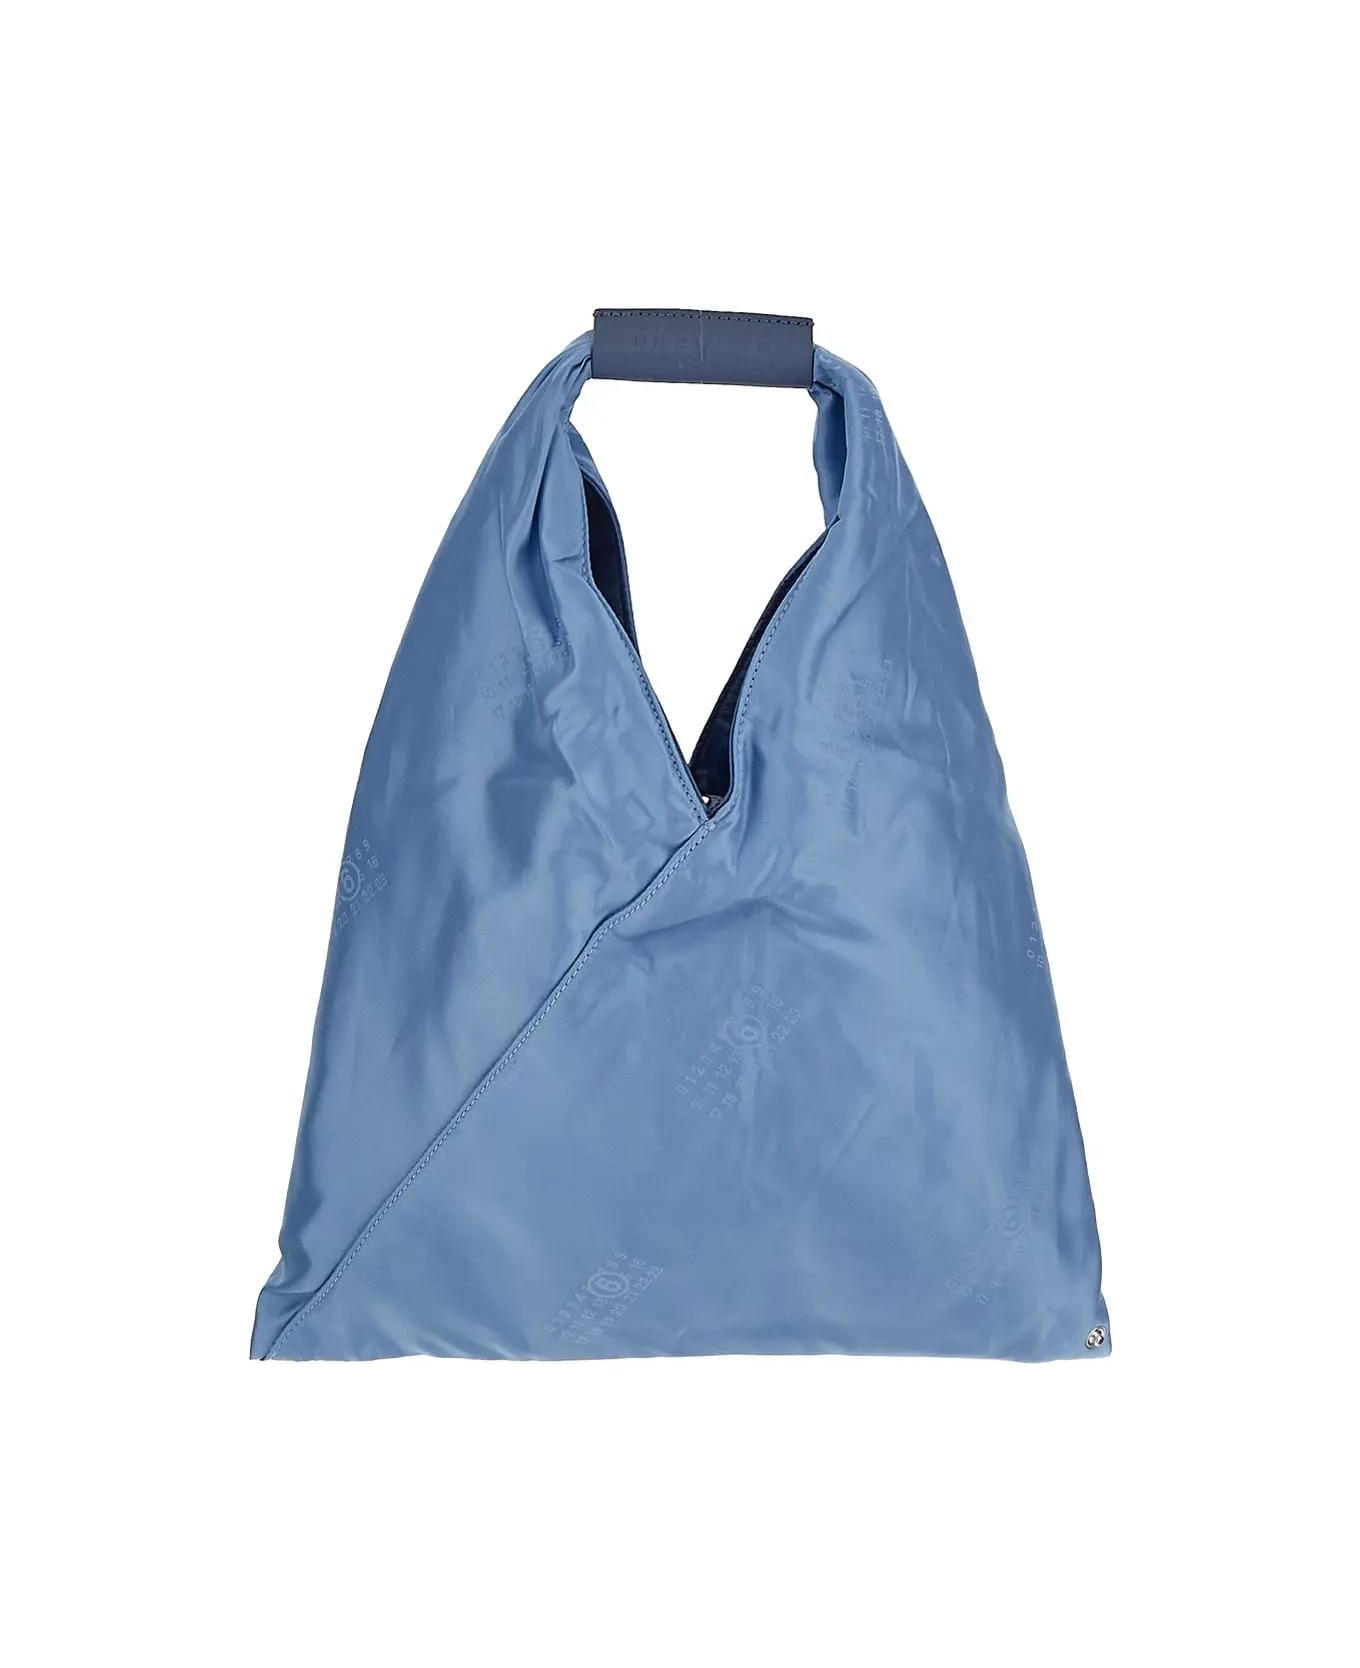 MM6 Maison Margiela Japanese Tote Bag - Blue